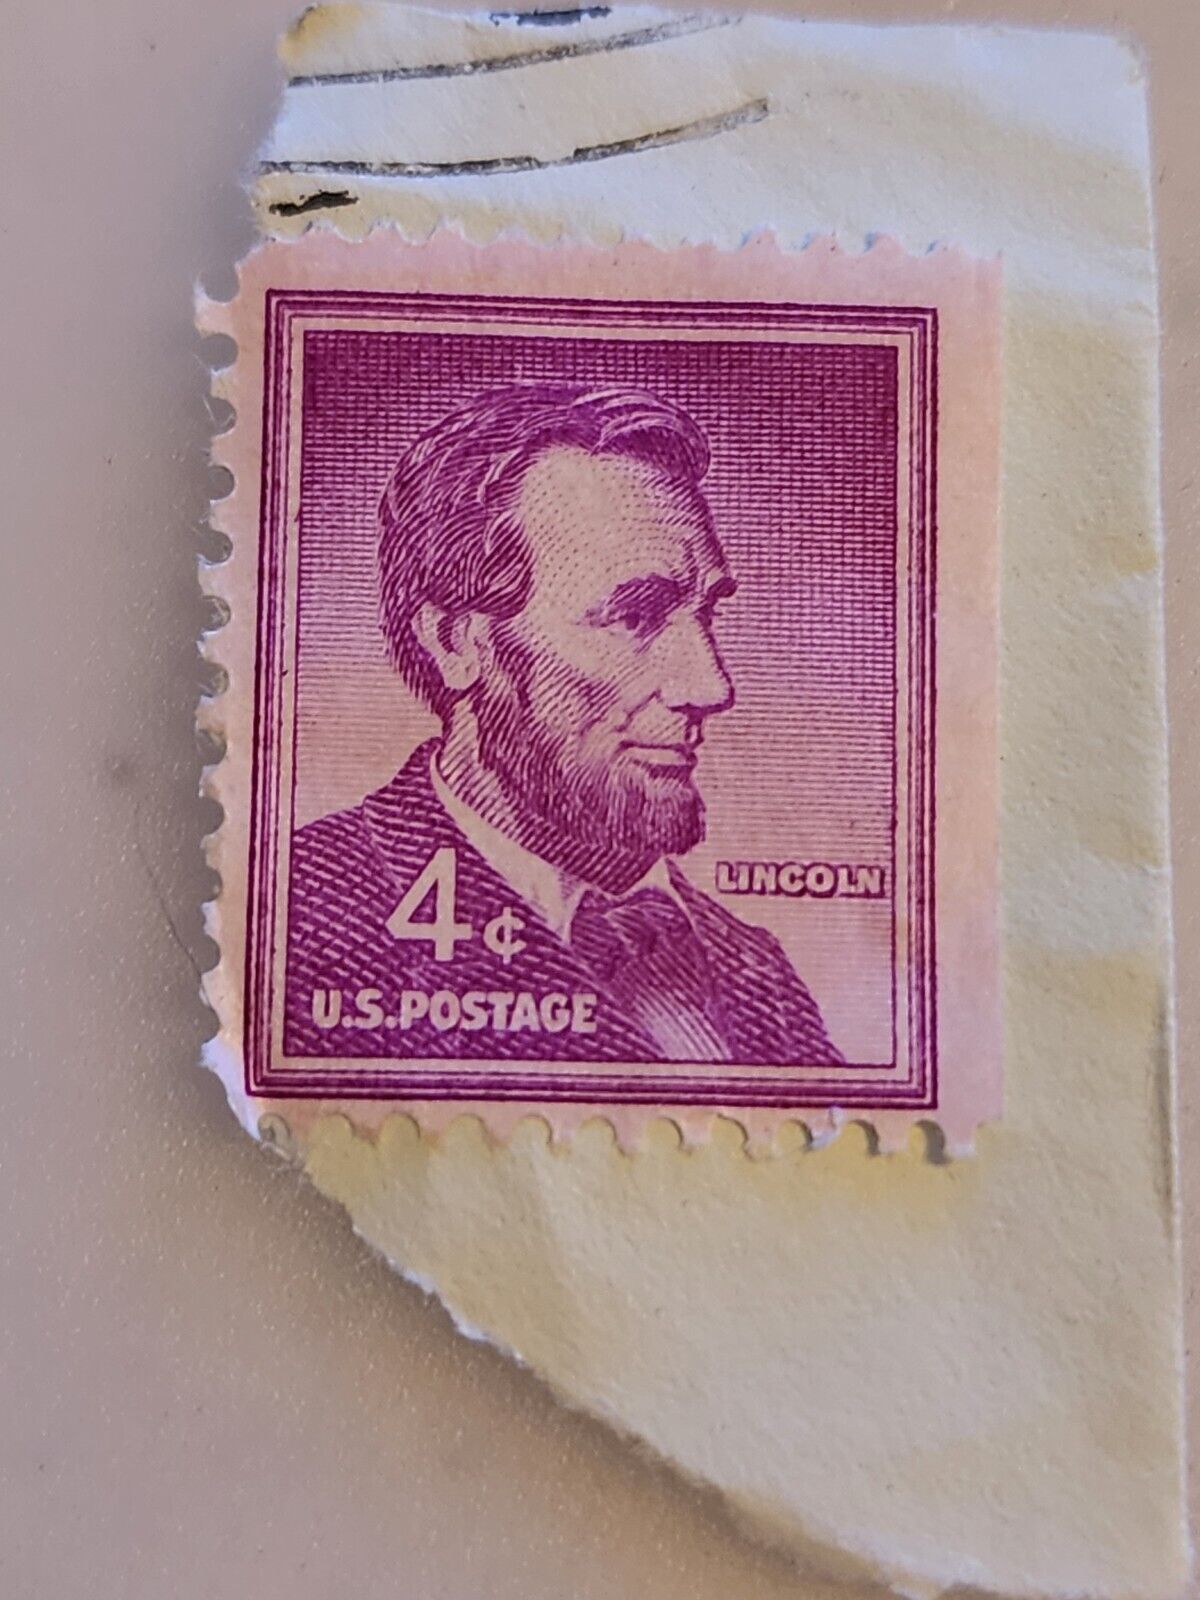 Rare US president Lincoln vintage stamp